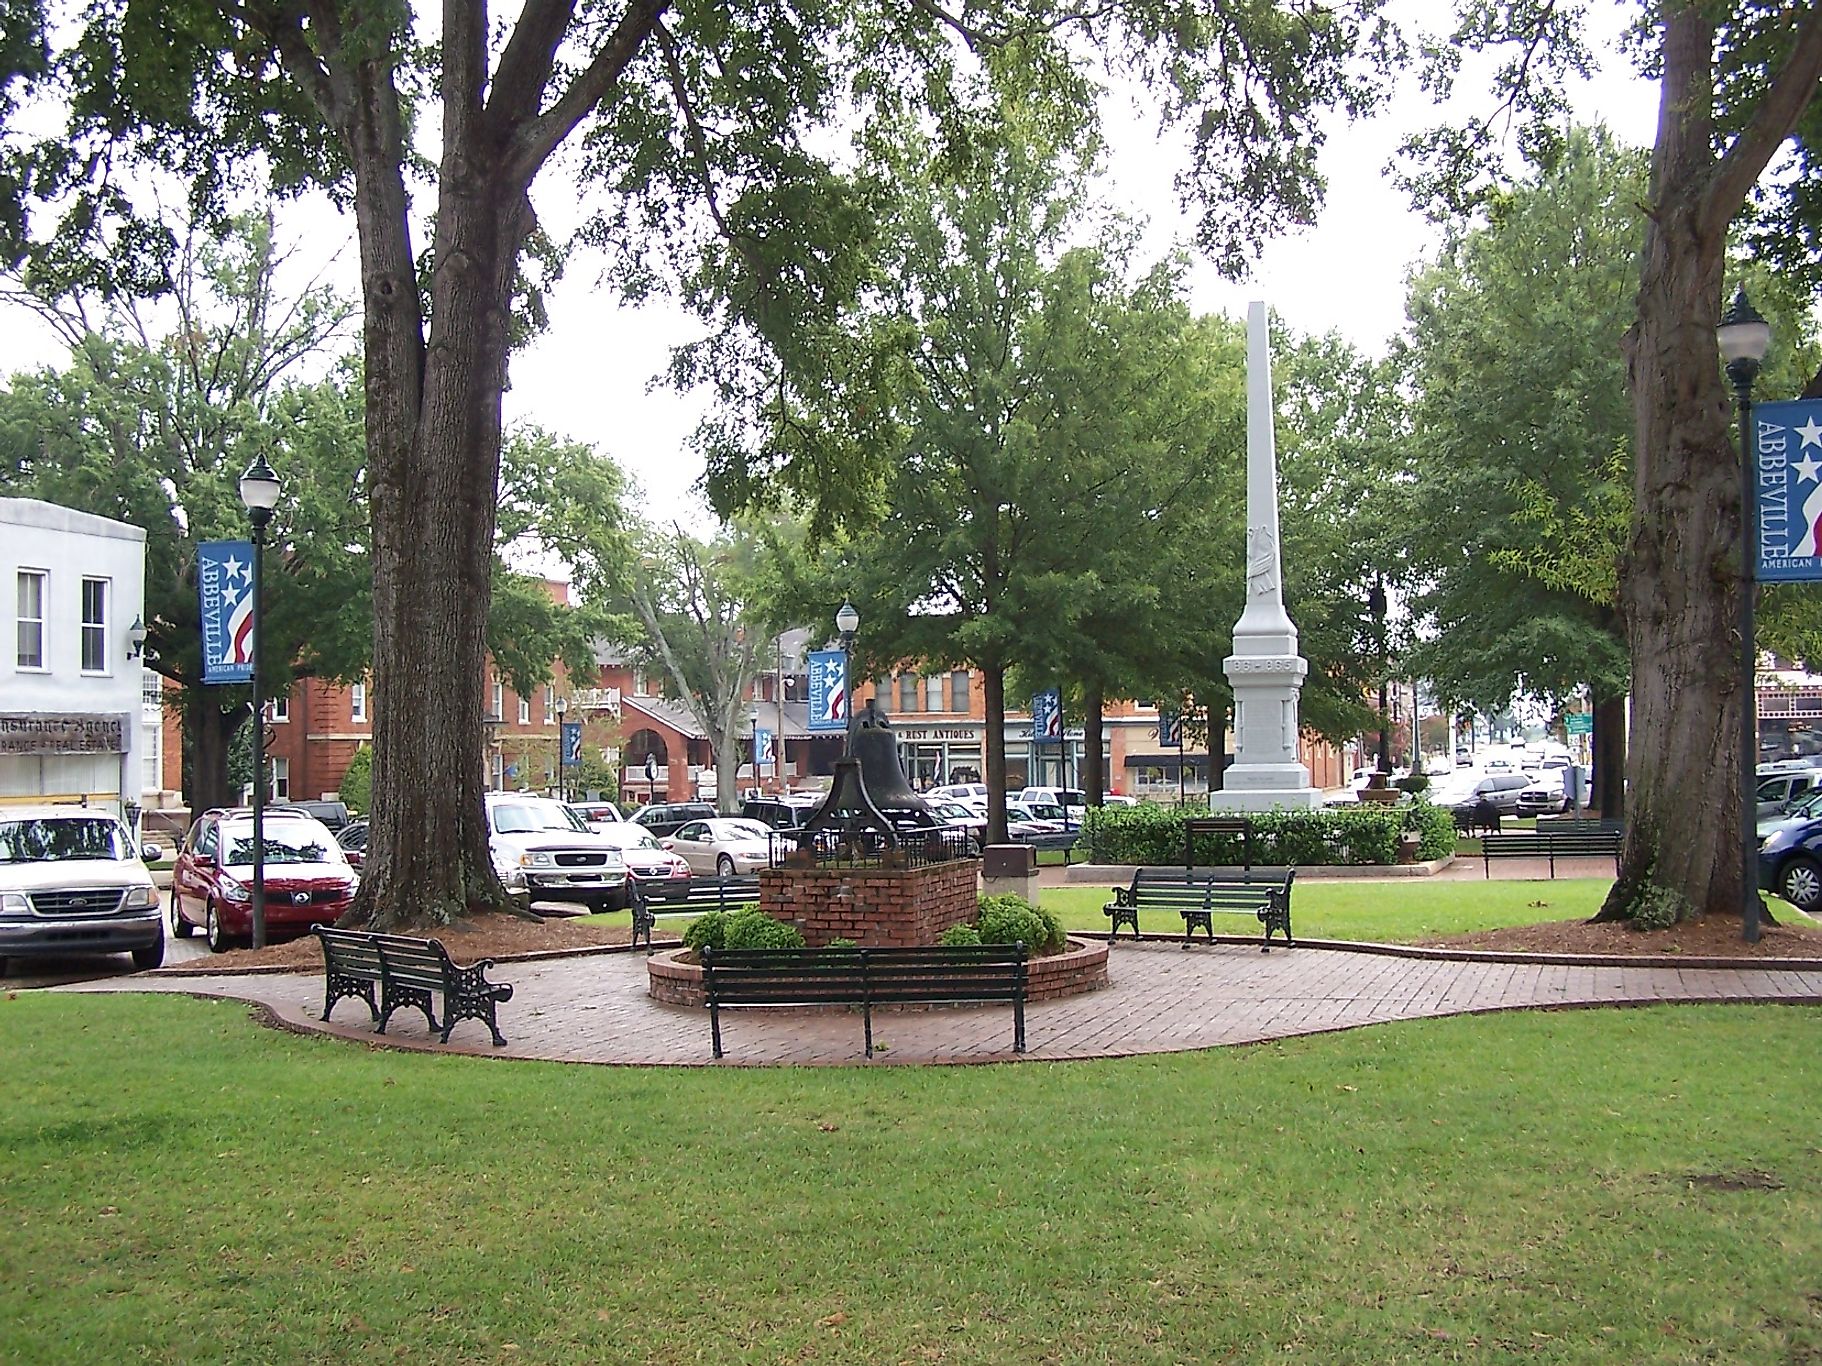 The City Square in Abbeville, South Carolina. Image credit: J. Stephen Conn via Flickr.com.